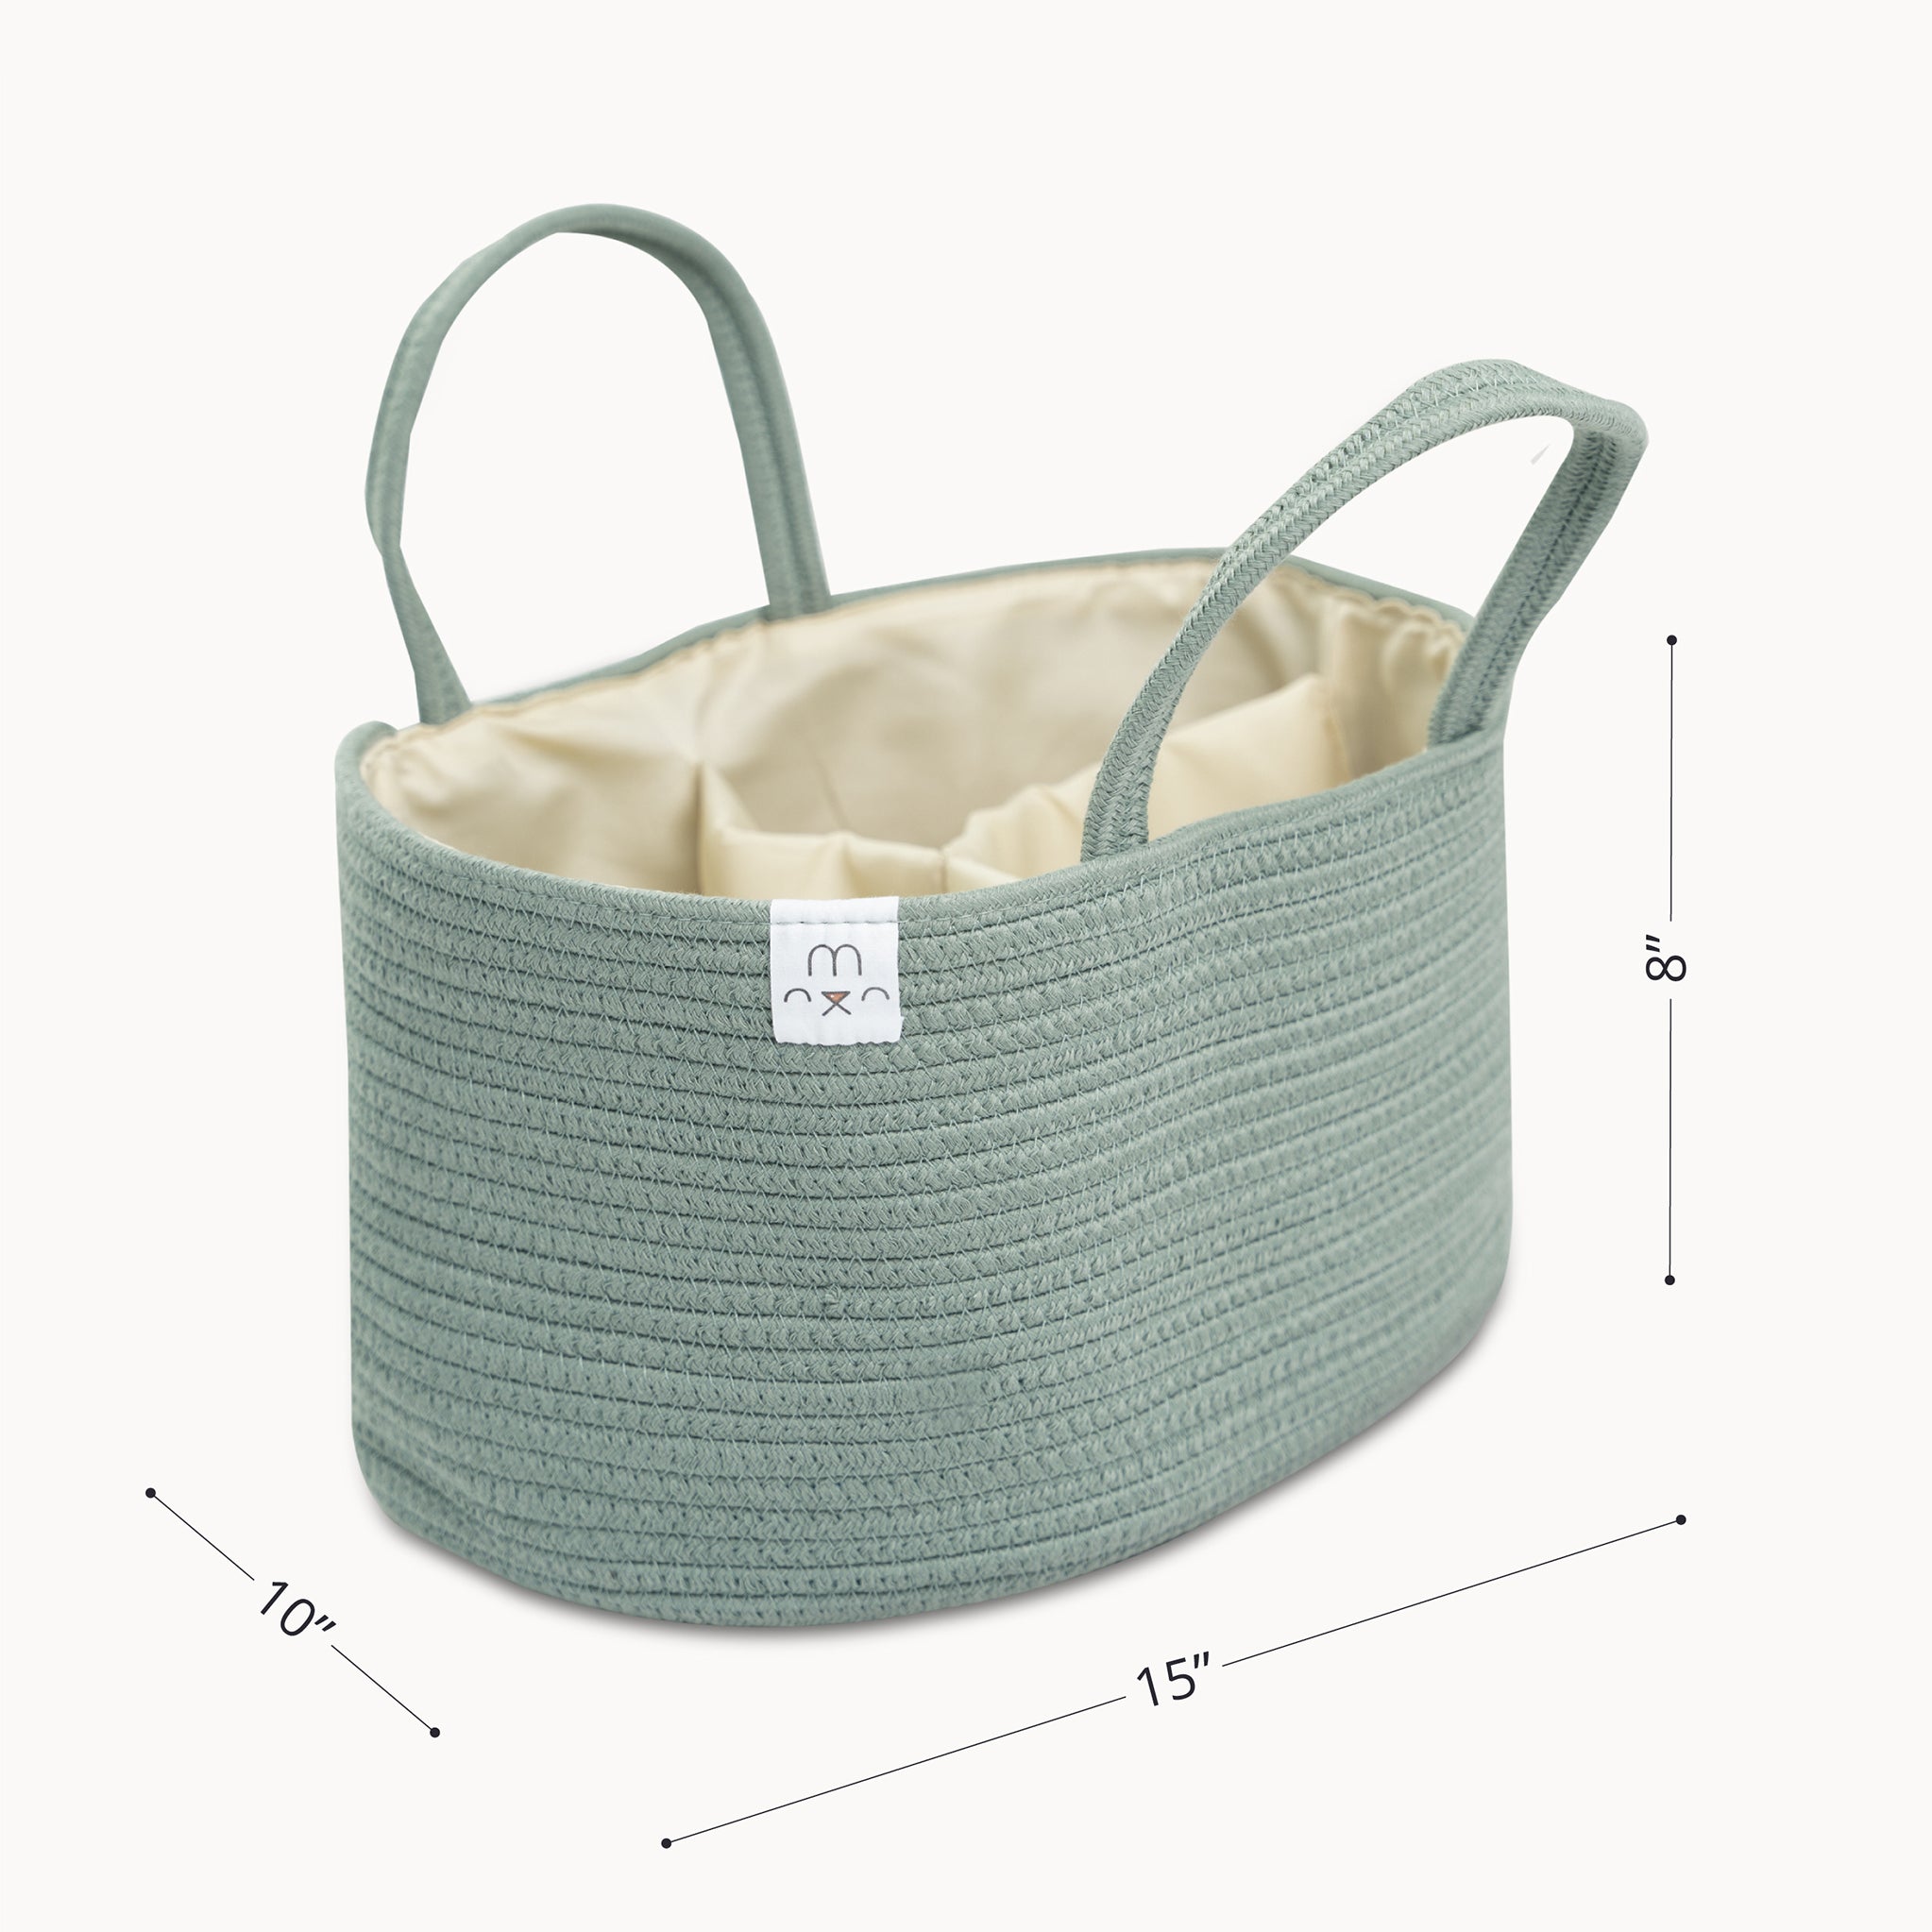 Set Of Three Cotton Rope Baskets for Storage, Diaper organizer